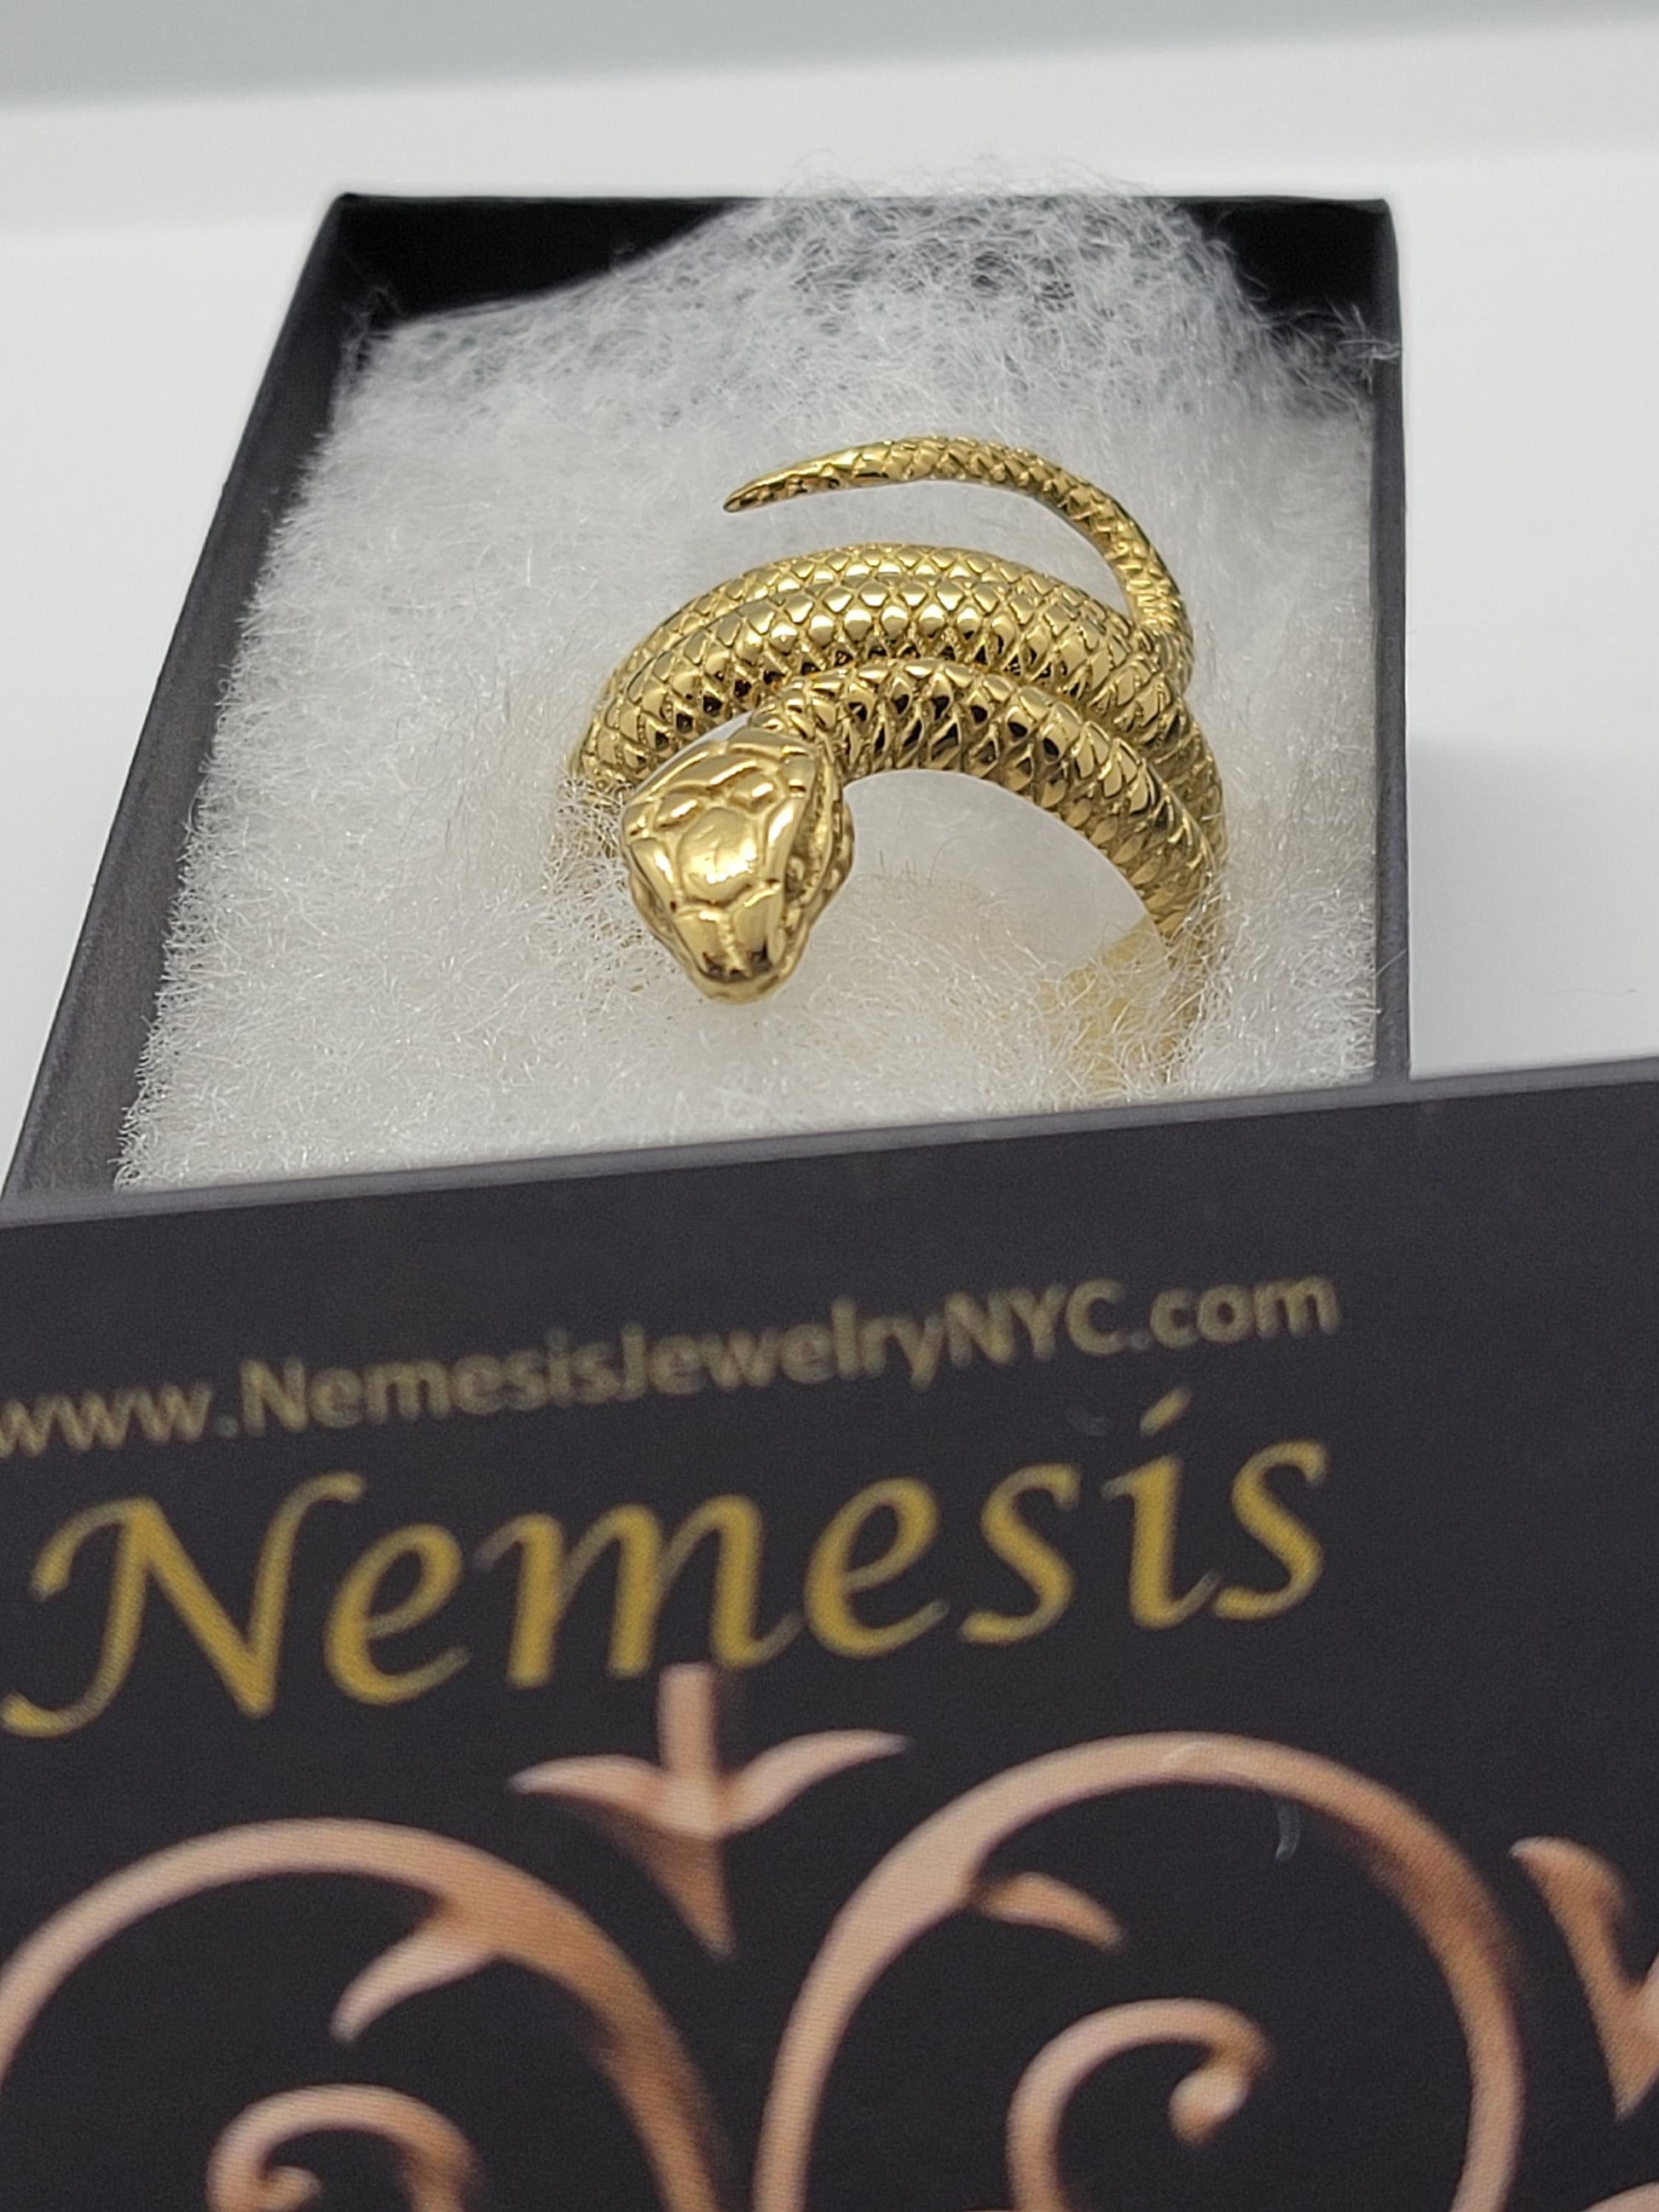 18k Gold Finish Stainless Steel Snake Ring in NemesisJewelryNYC.com black jewelry box